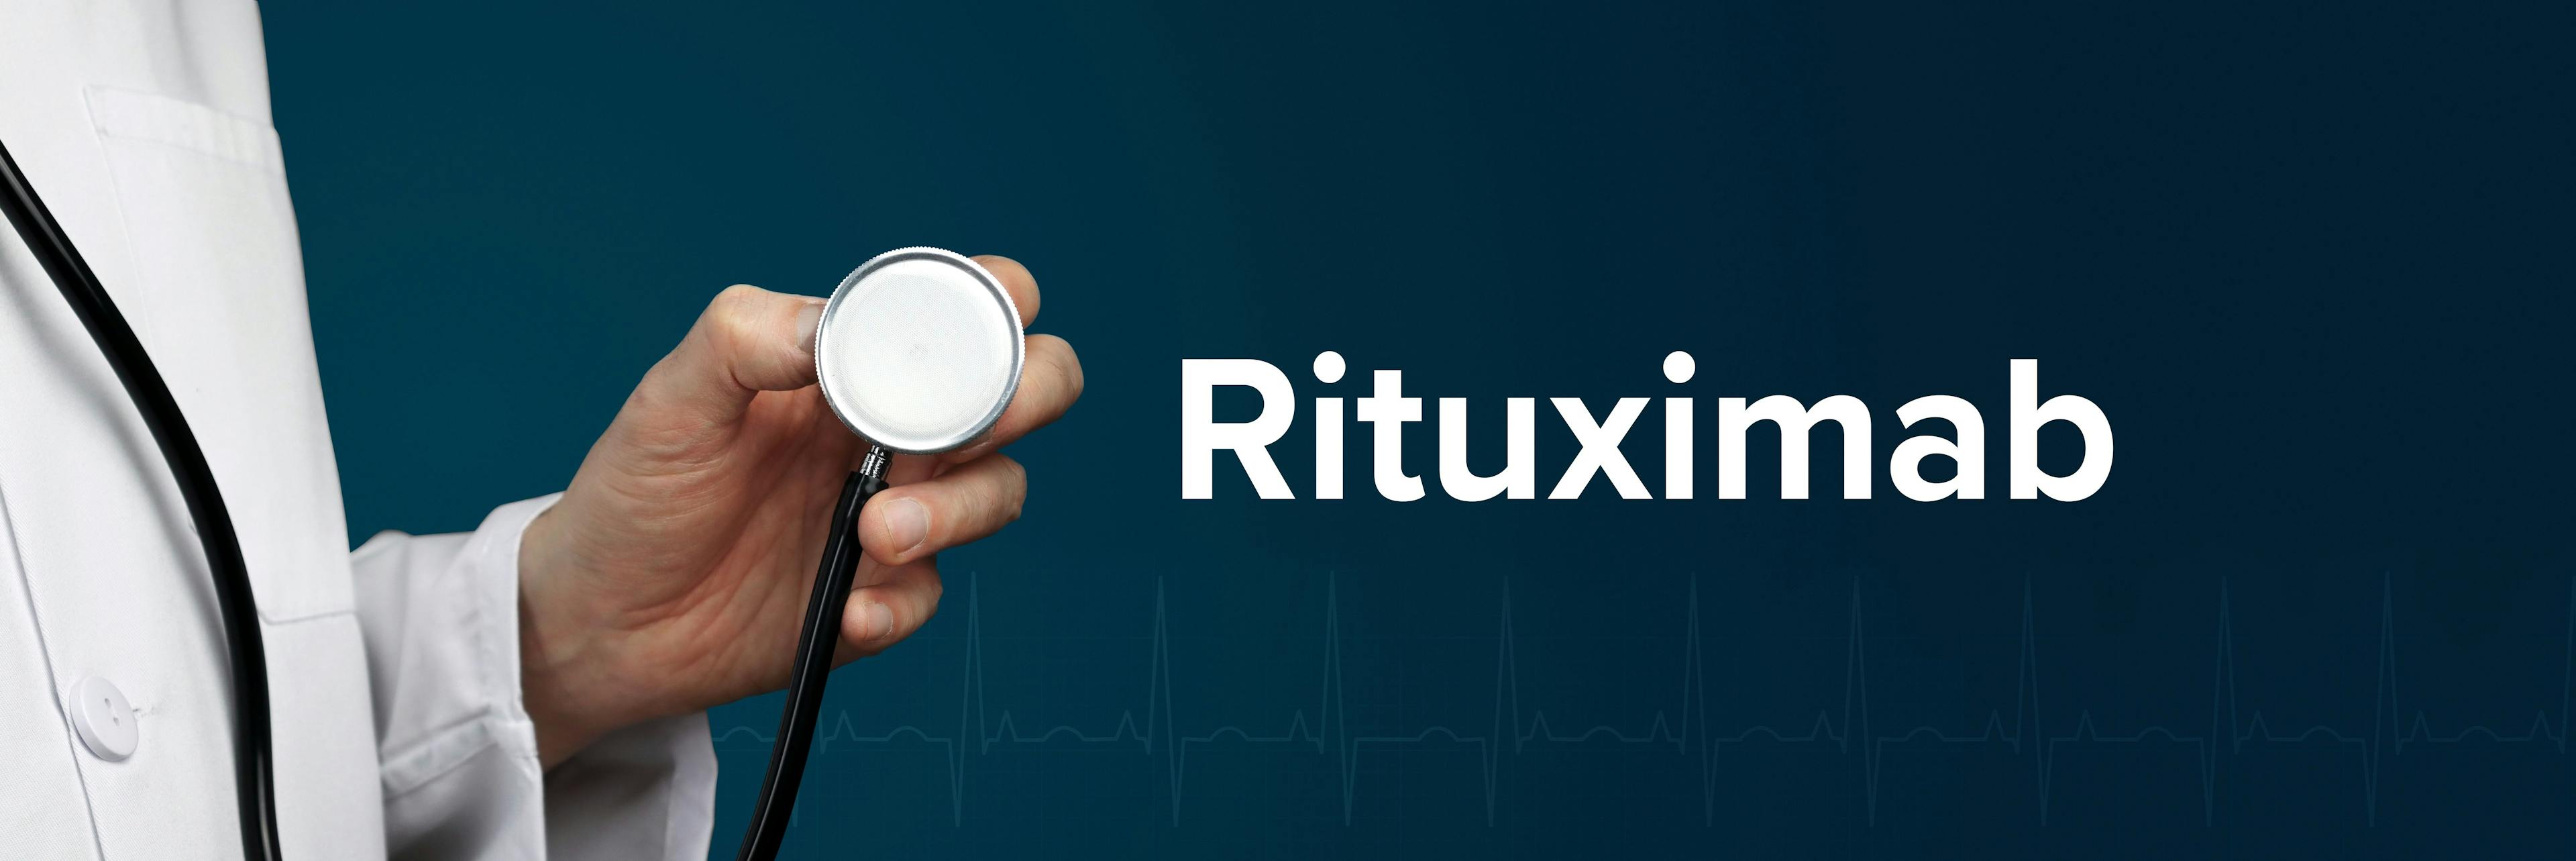 Doctor holds stethoscope surrounding rituximab text | Image Credit: MQ-Illustrations - stock.adobe.com